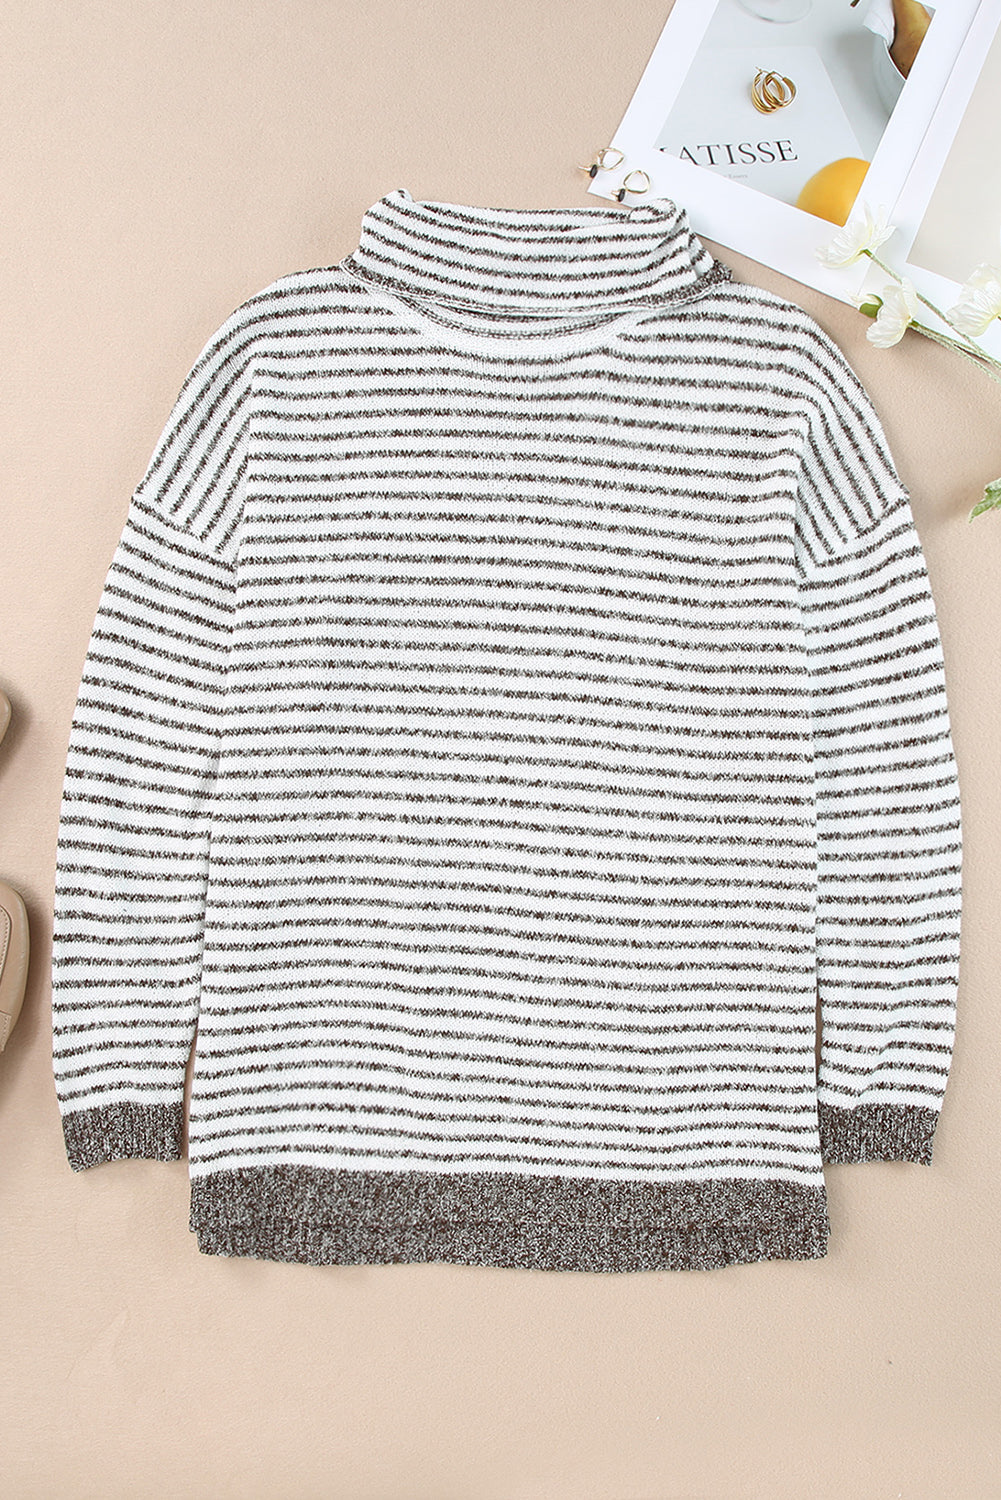 Black Striped Turtleneck Loose Sweater